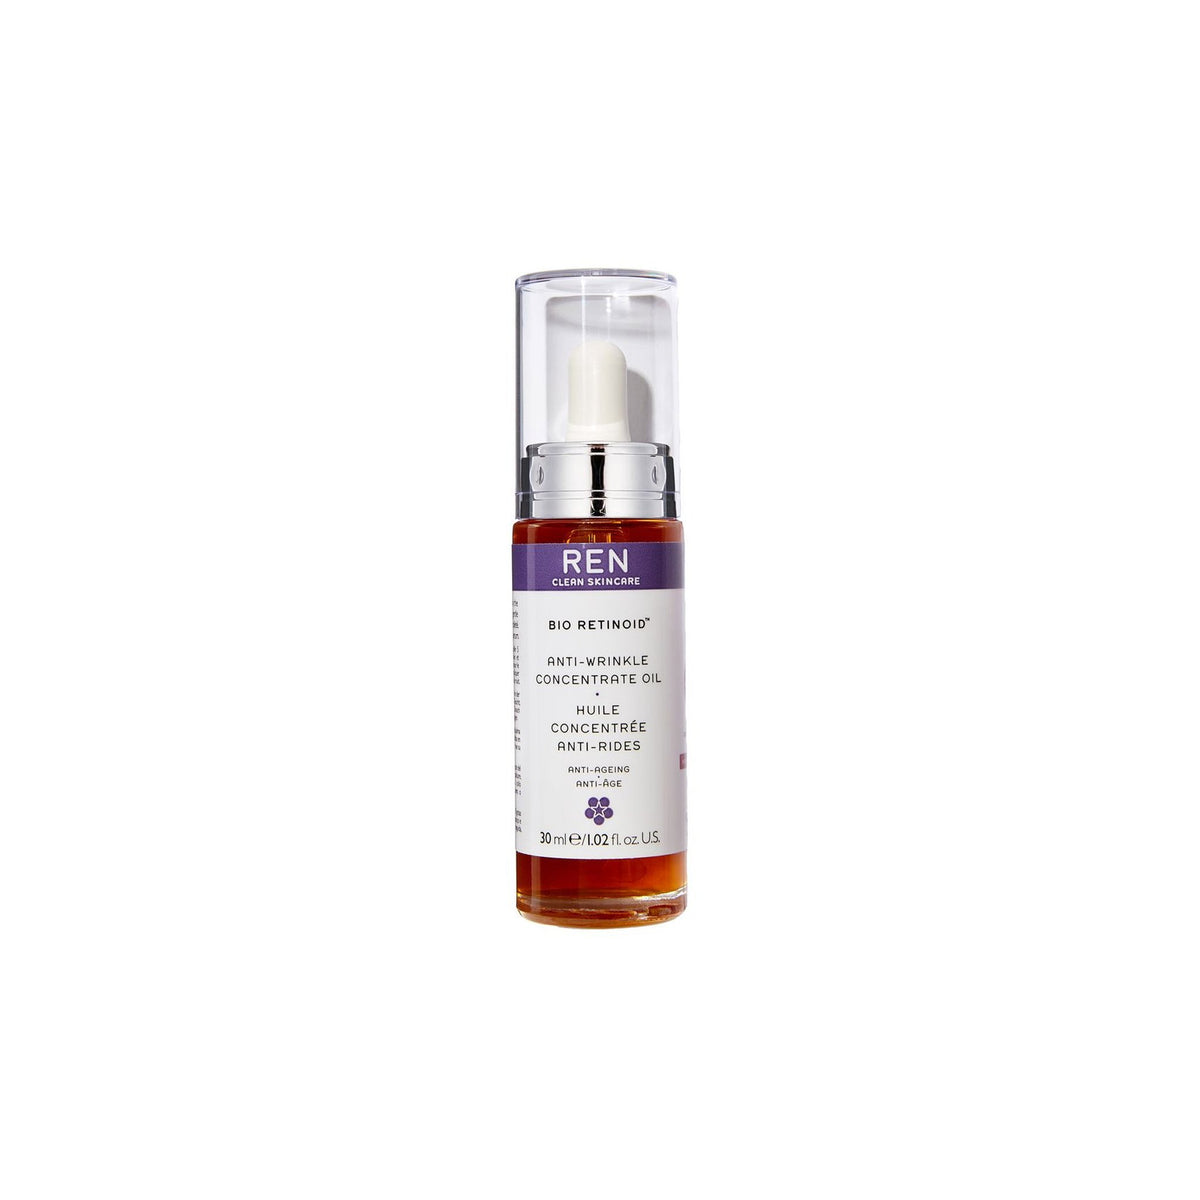 Ren Bio Retinoid Anti-Wrinkle Concentrate Oil 30ml